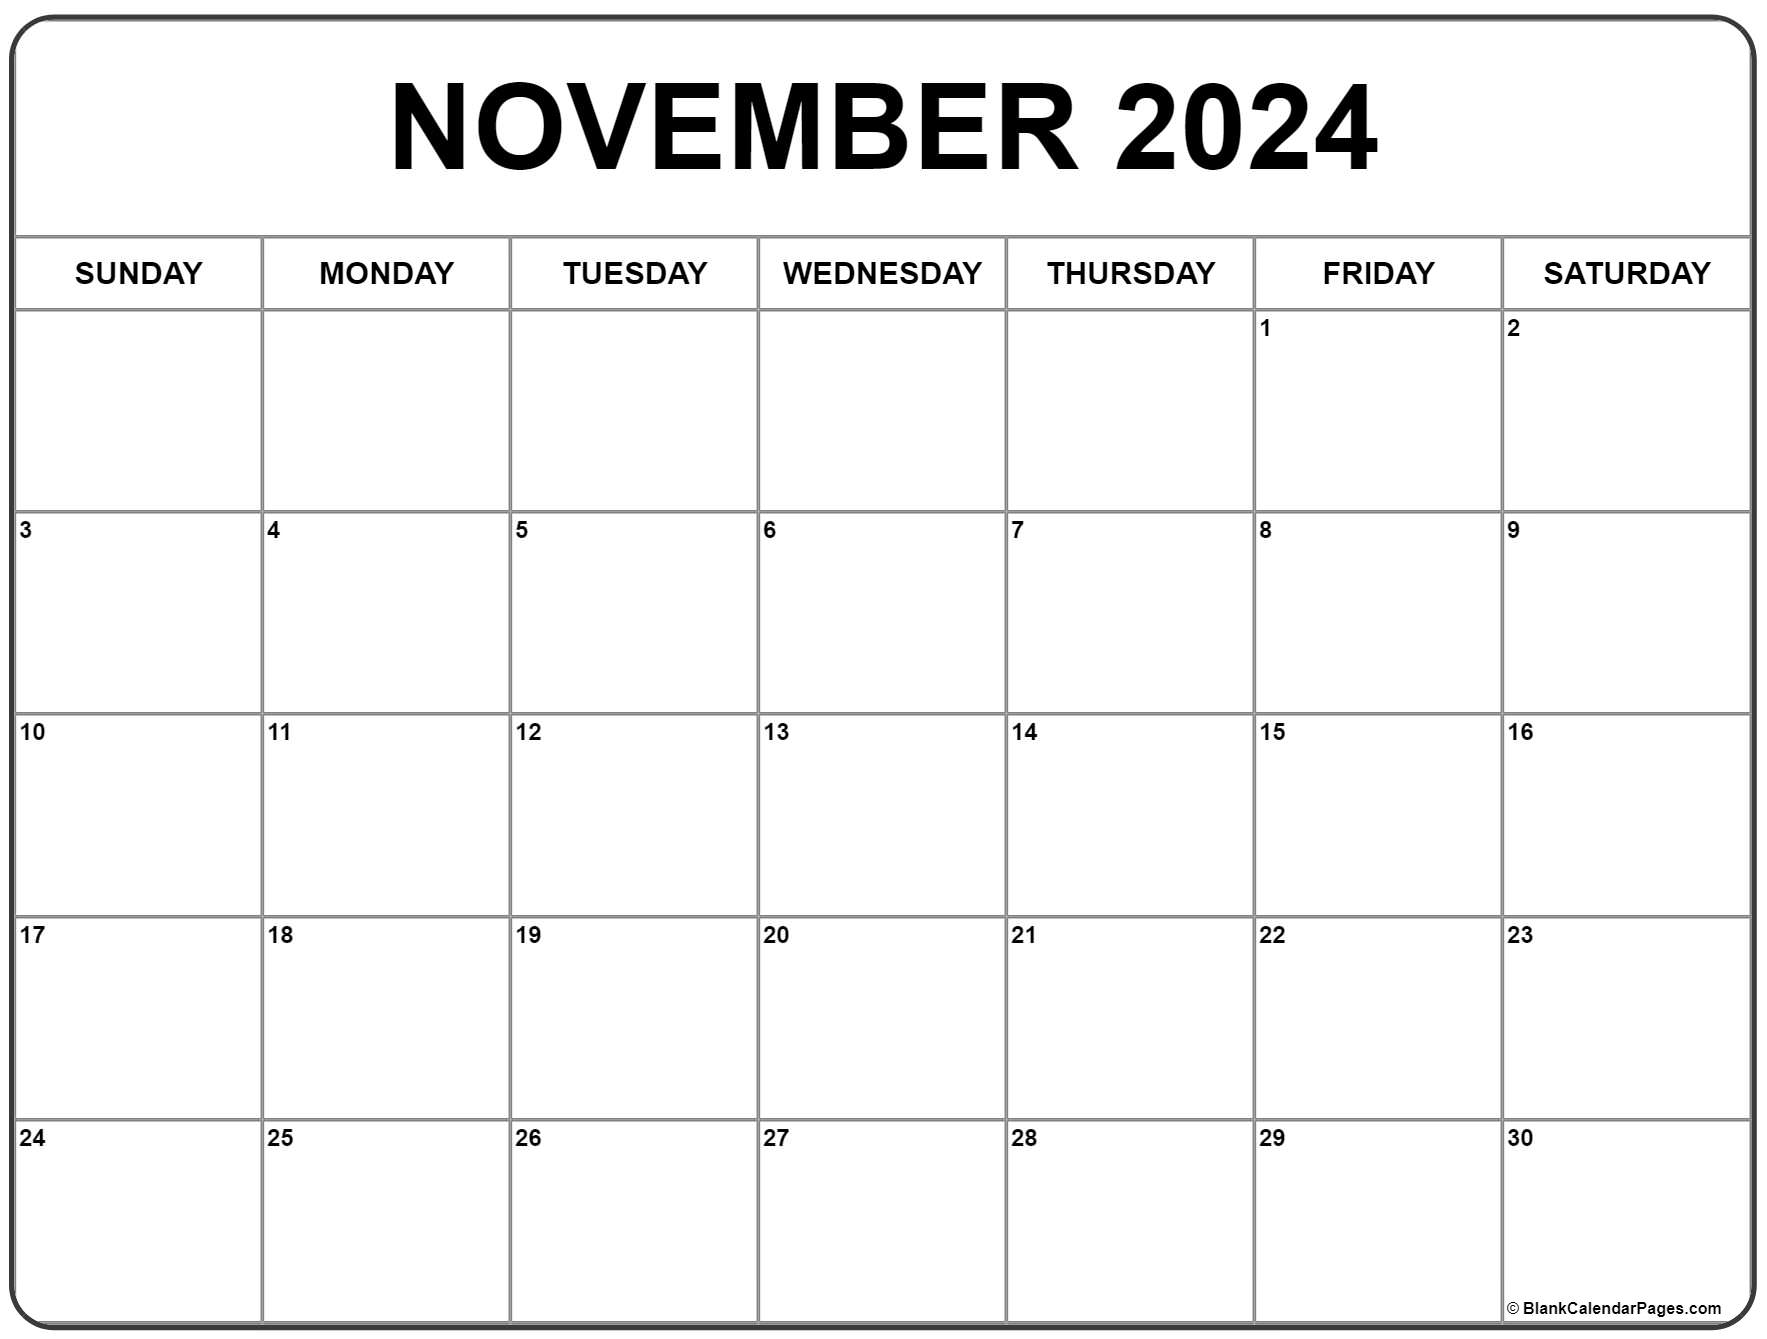 Nov Calendar 2022 November 2022 Calendar | Free Printable Calendar Templates